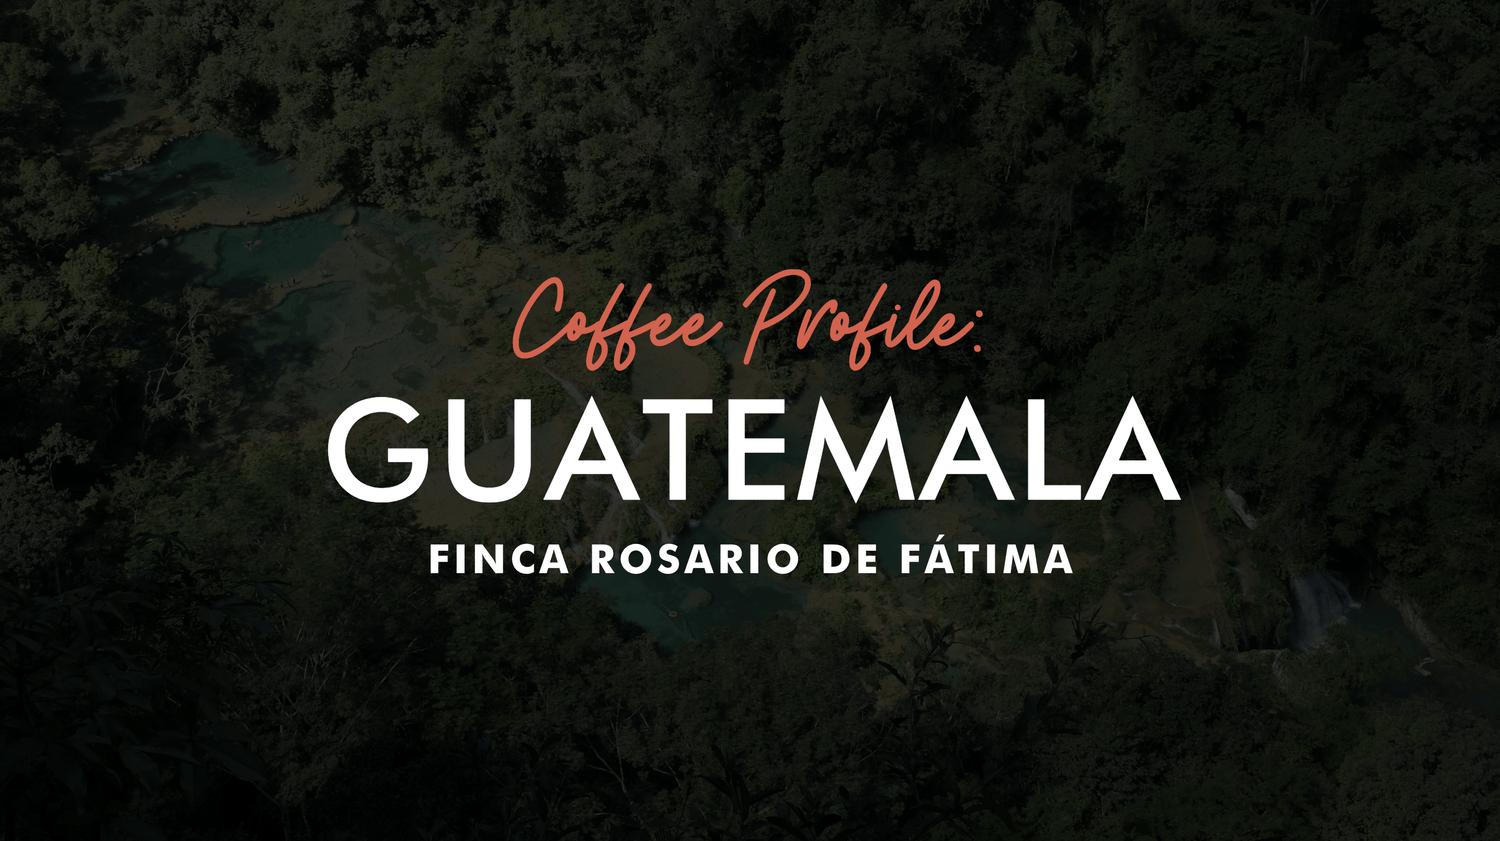 Guatemala coffee profile: Finca Rosario De Fátima